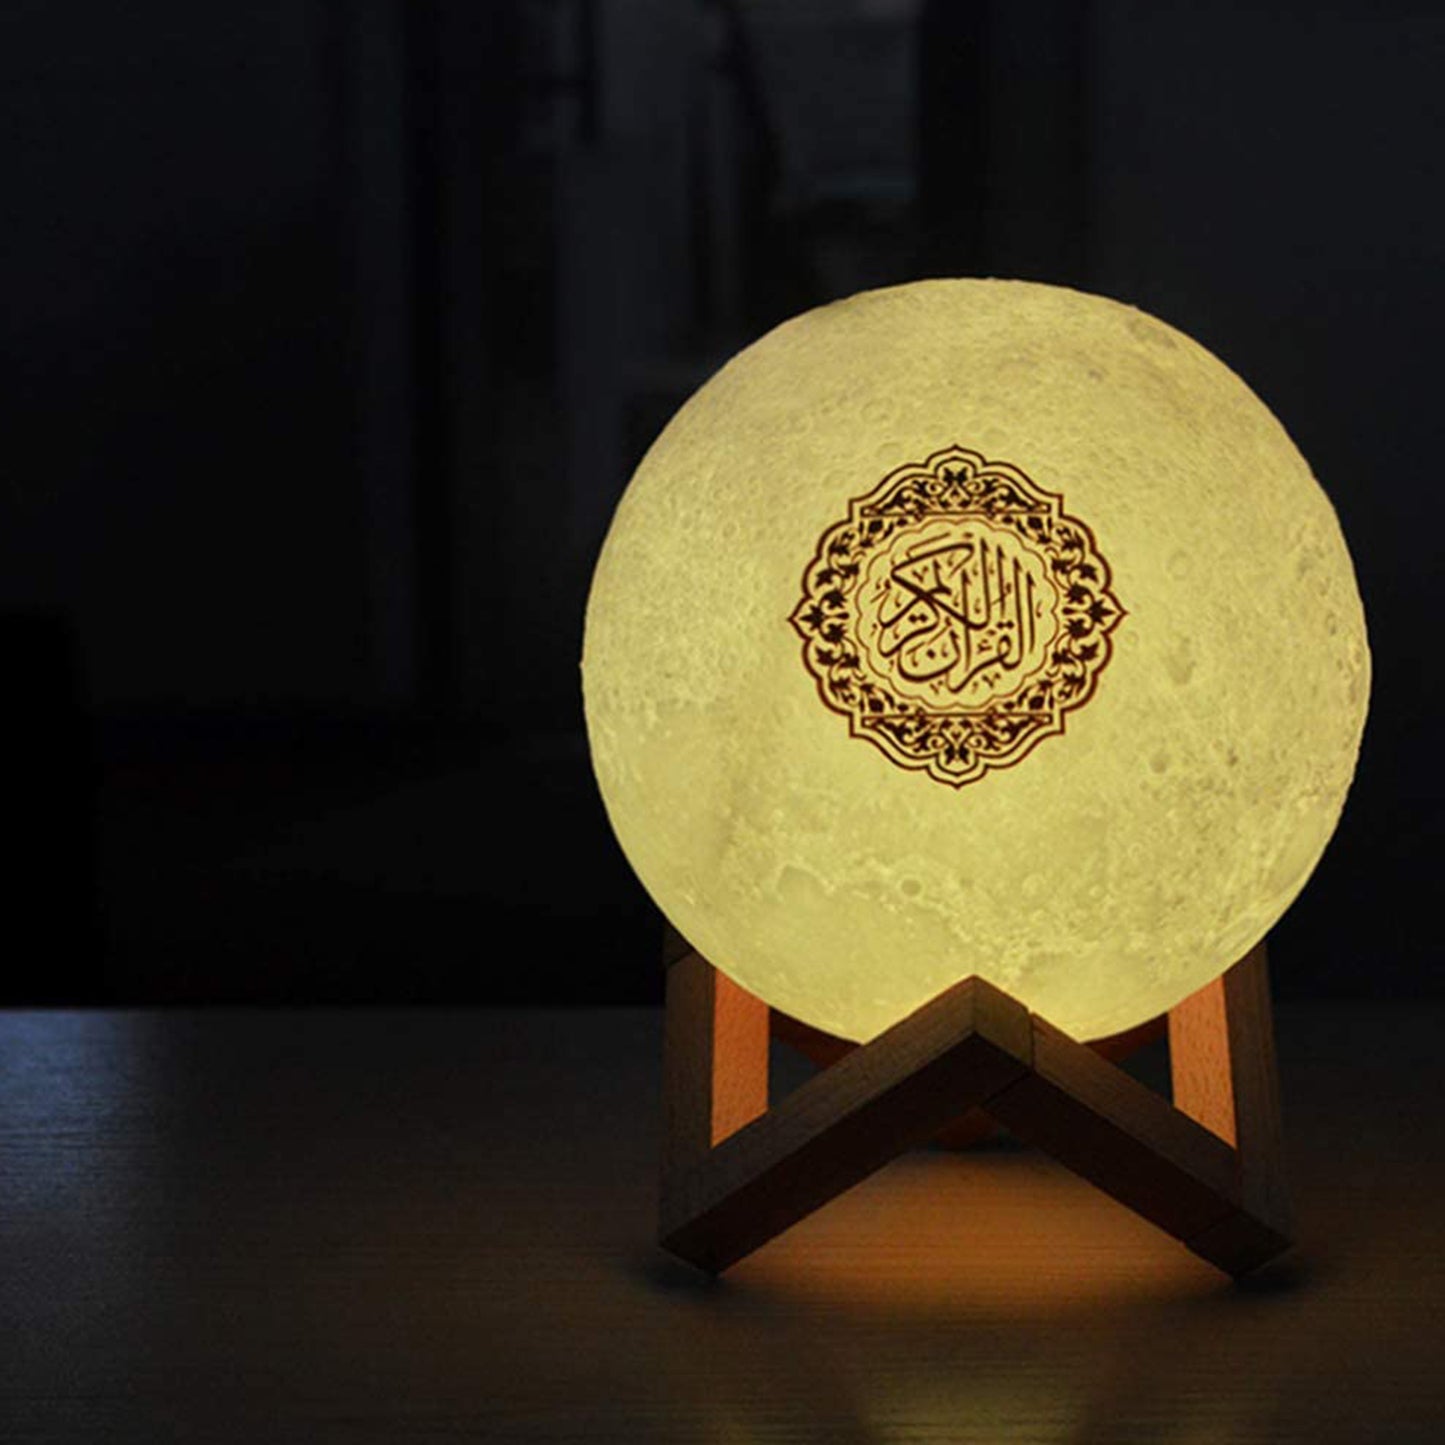 Sunset Moon Lamp Quran Speaker SQ-510